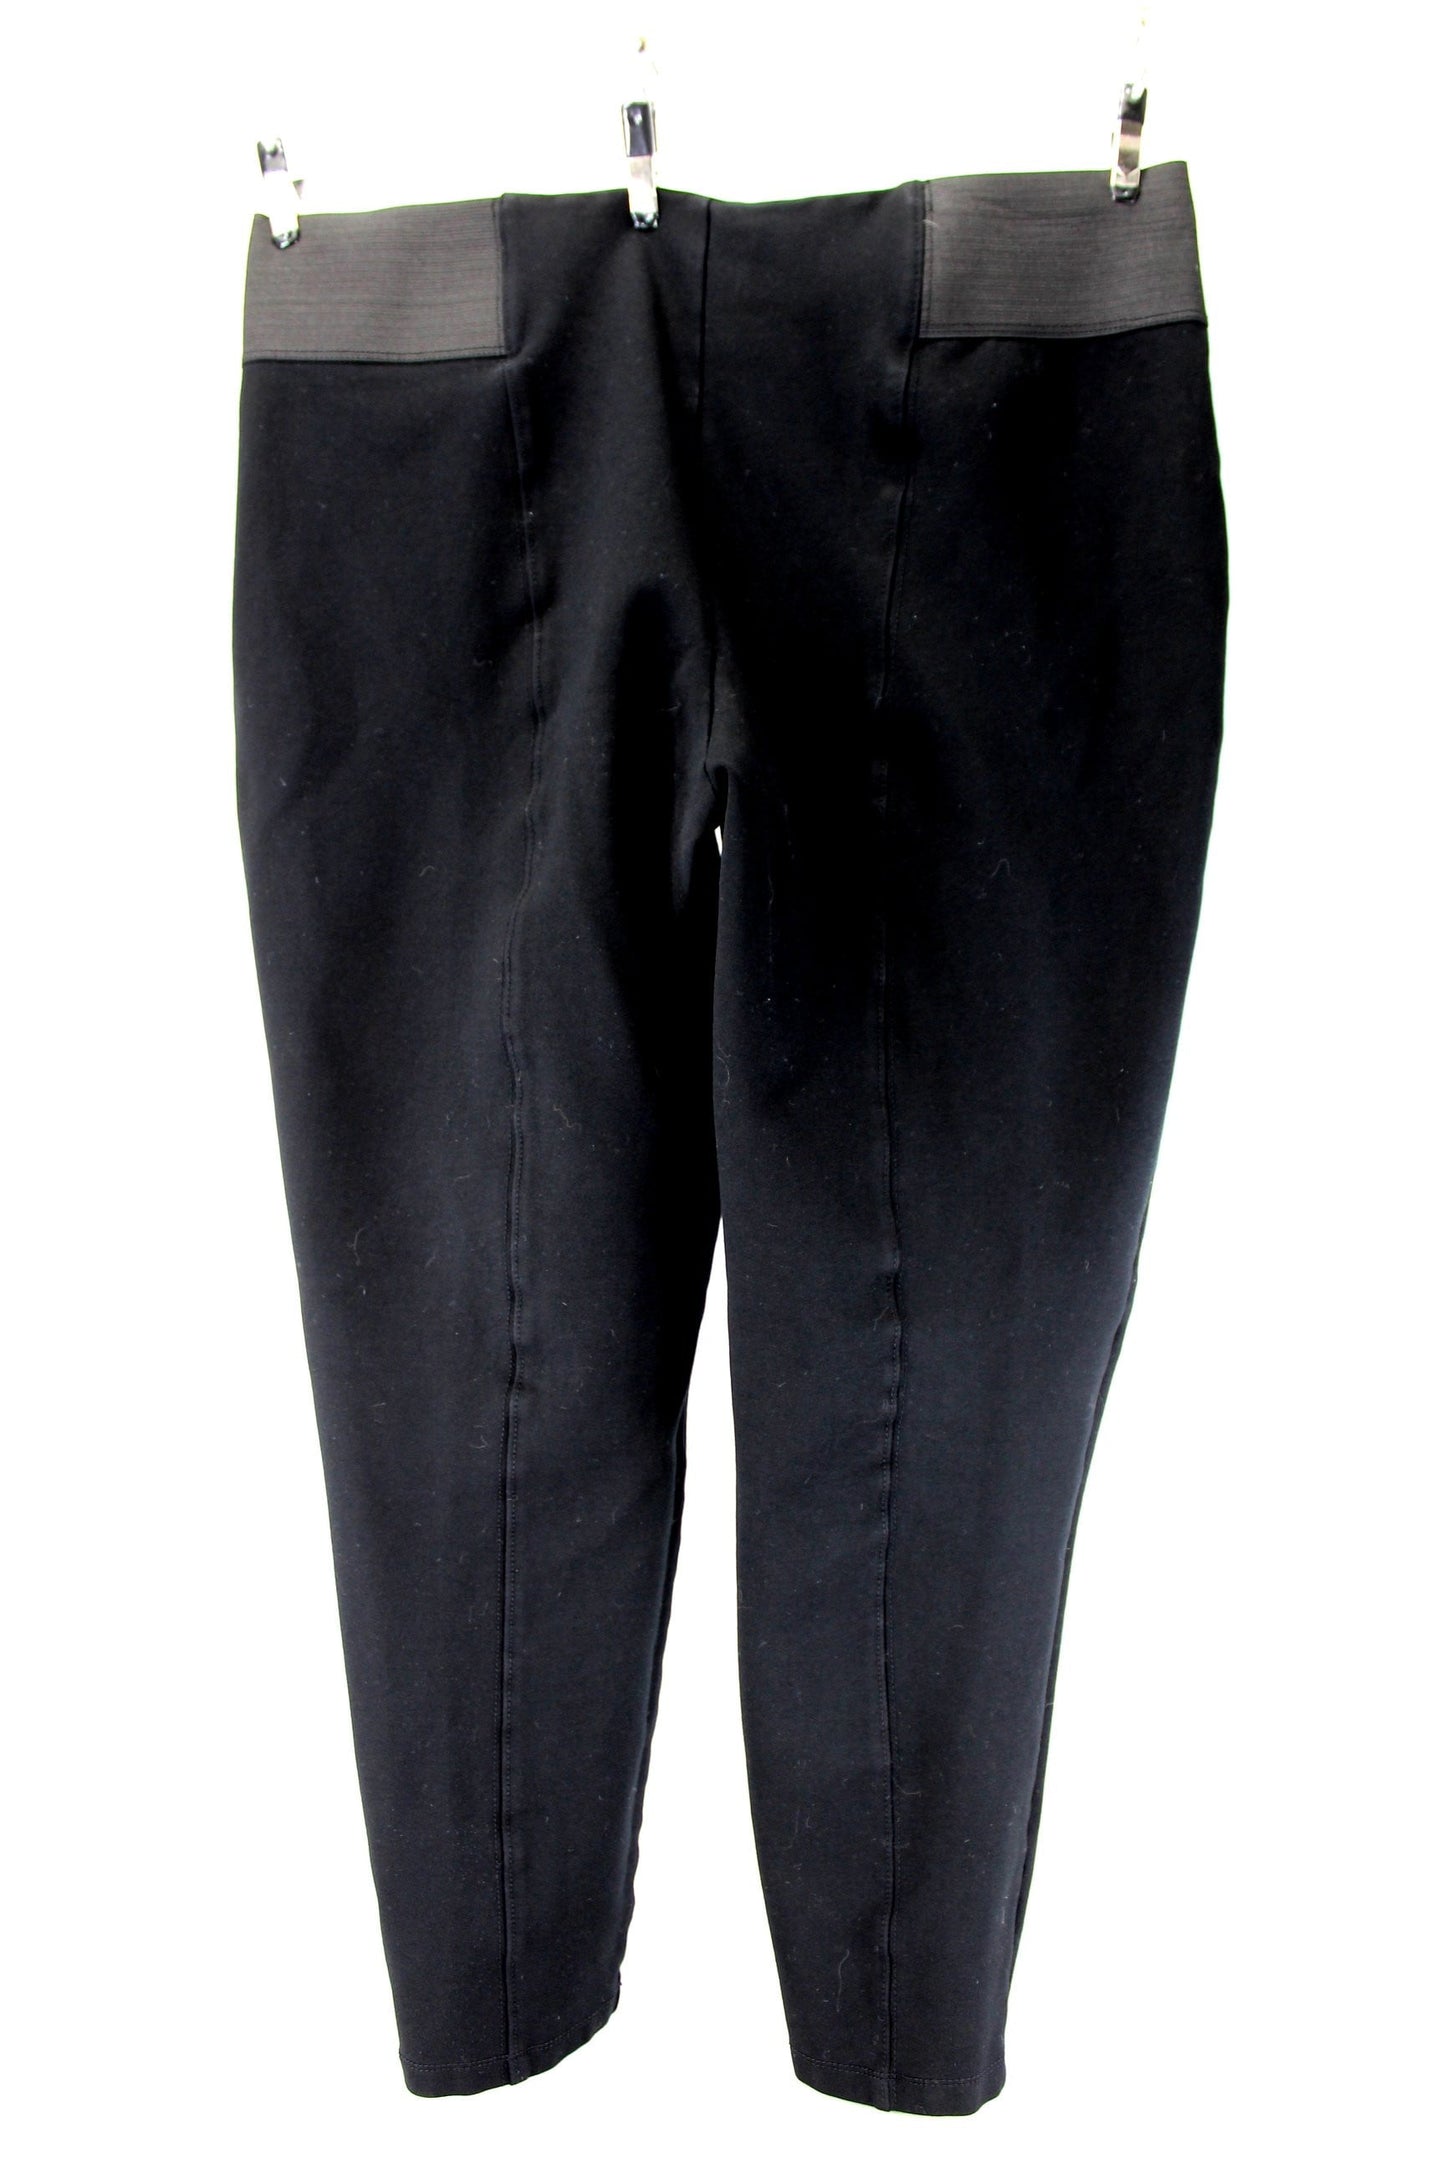 June & Hudson Black Stretch Pants Leggings  - Side Elastic - Rayon Nylon Spandex designer pants leggings